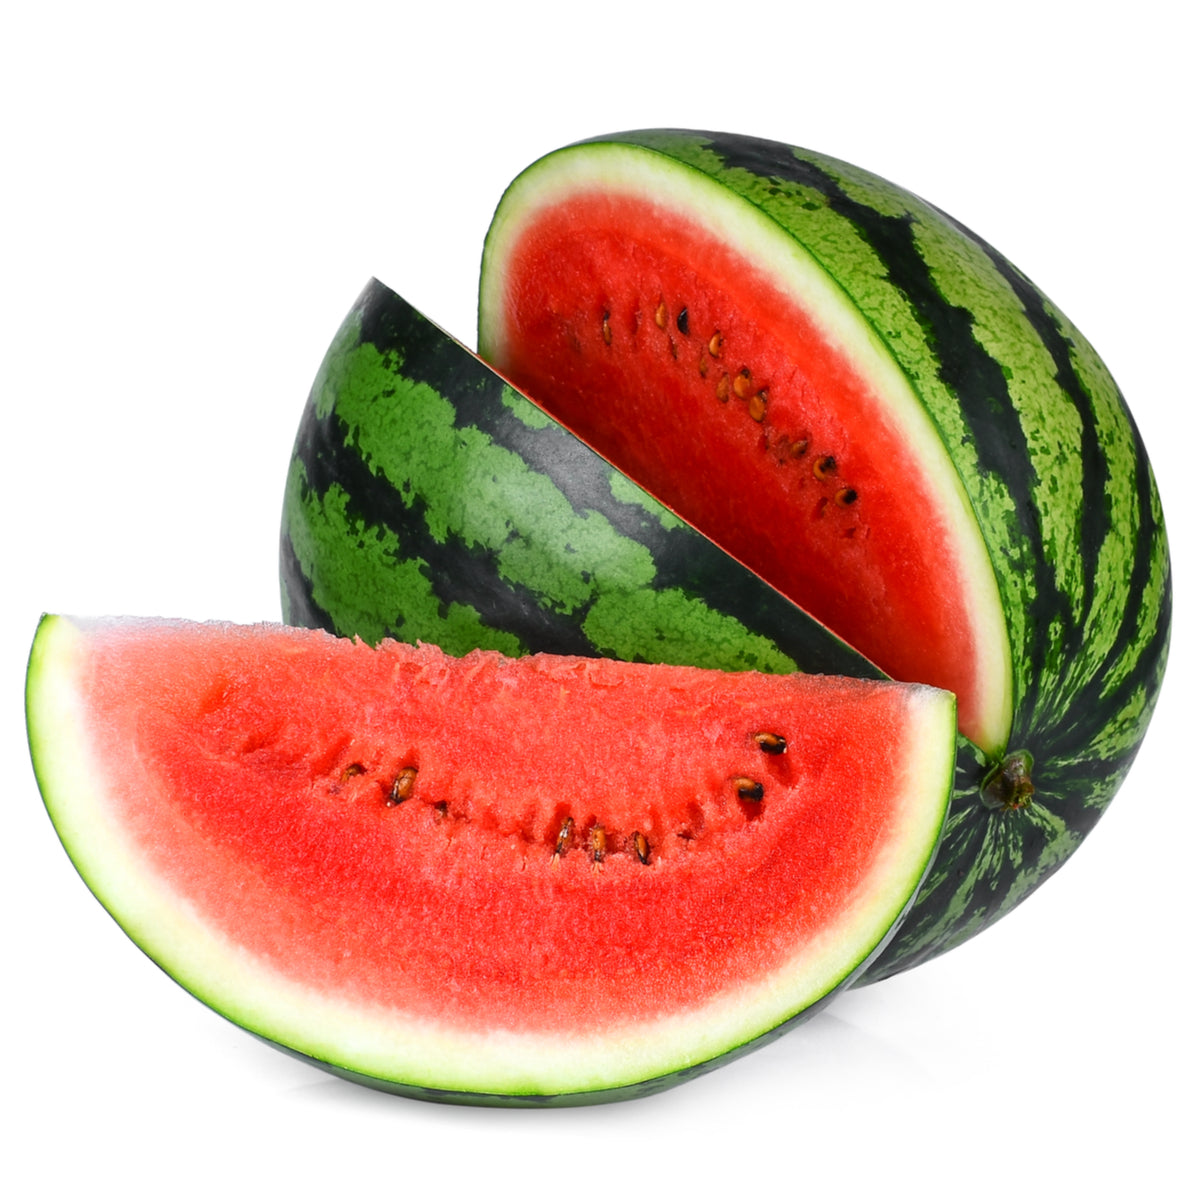 Watermelon - India